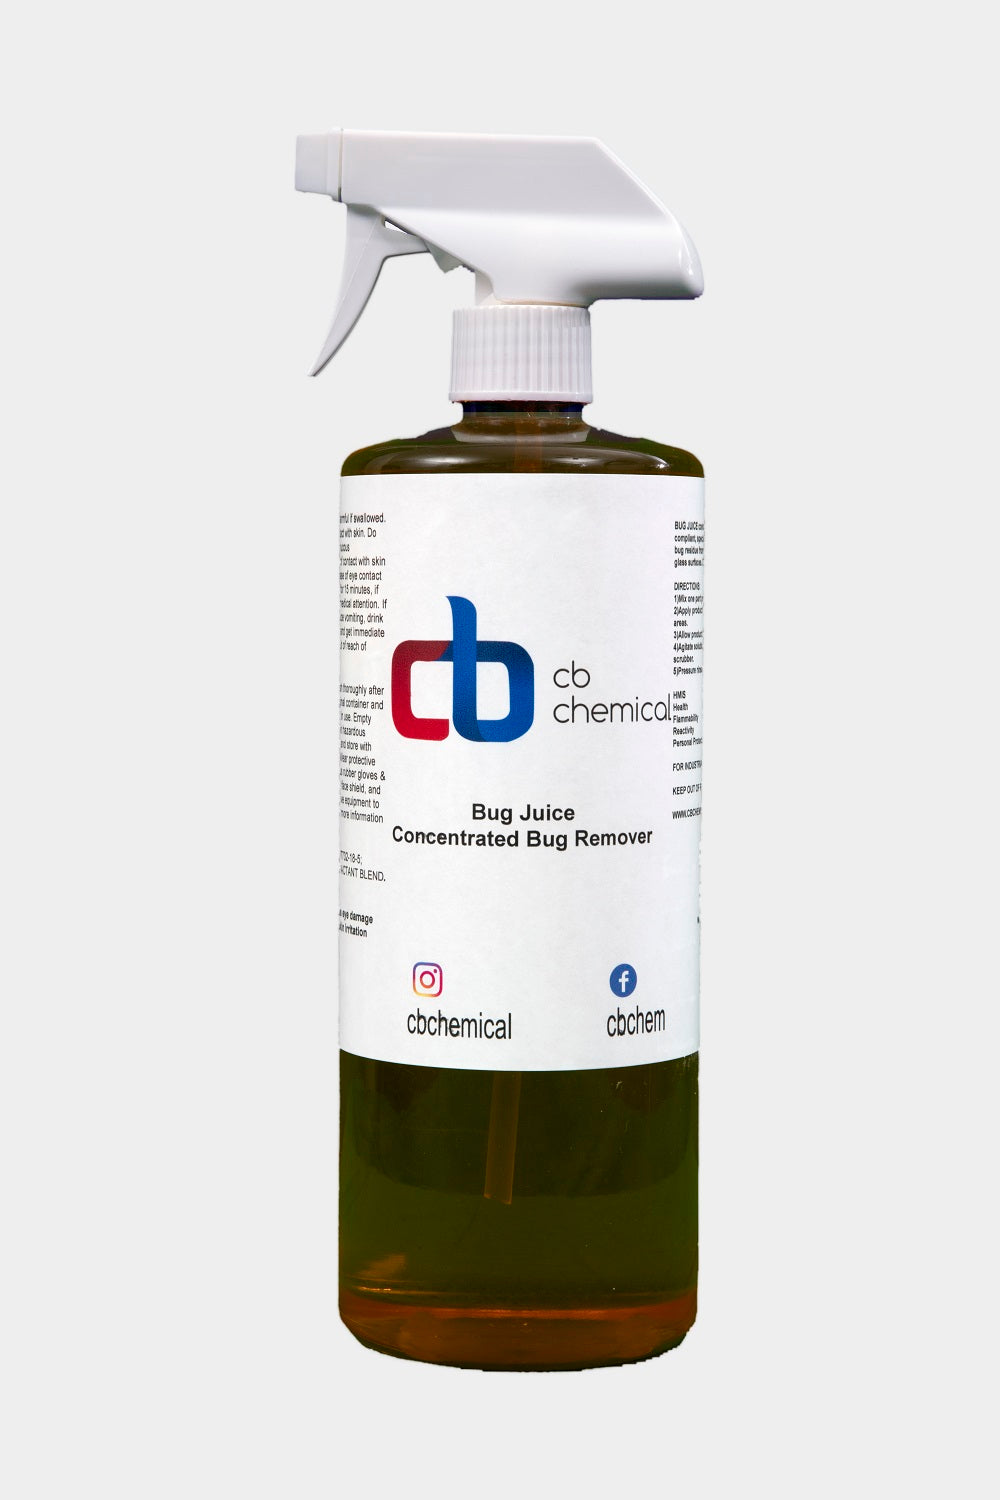 Bug Juice - C & B Chemical, Inc